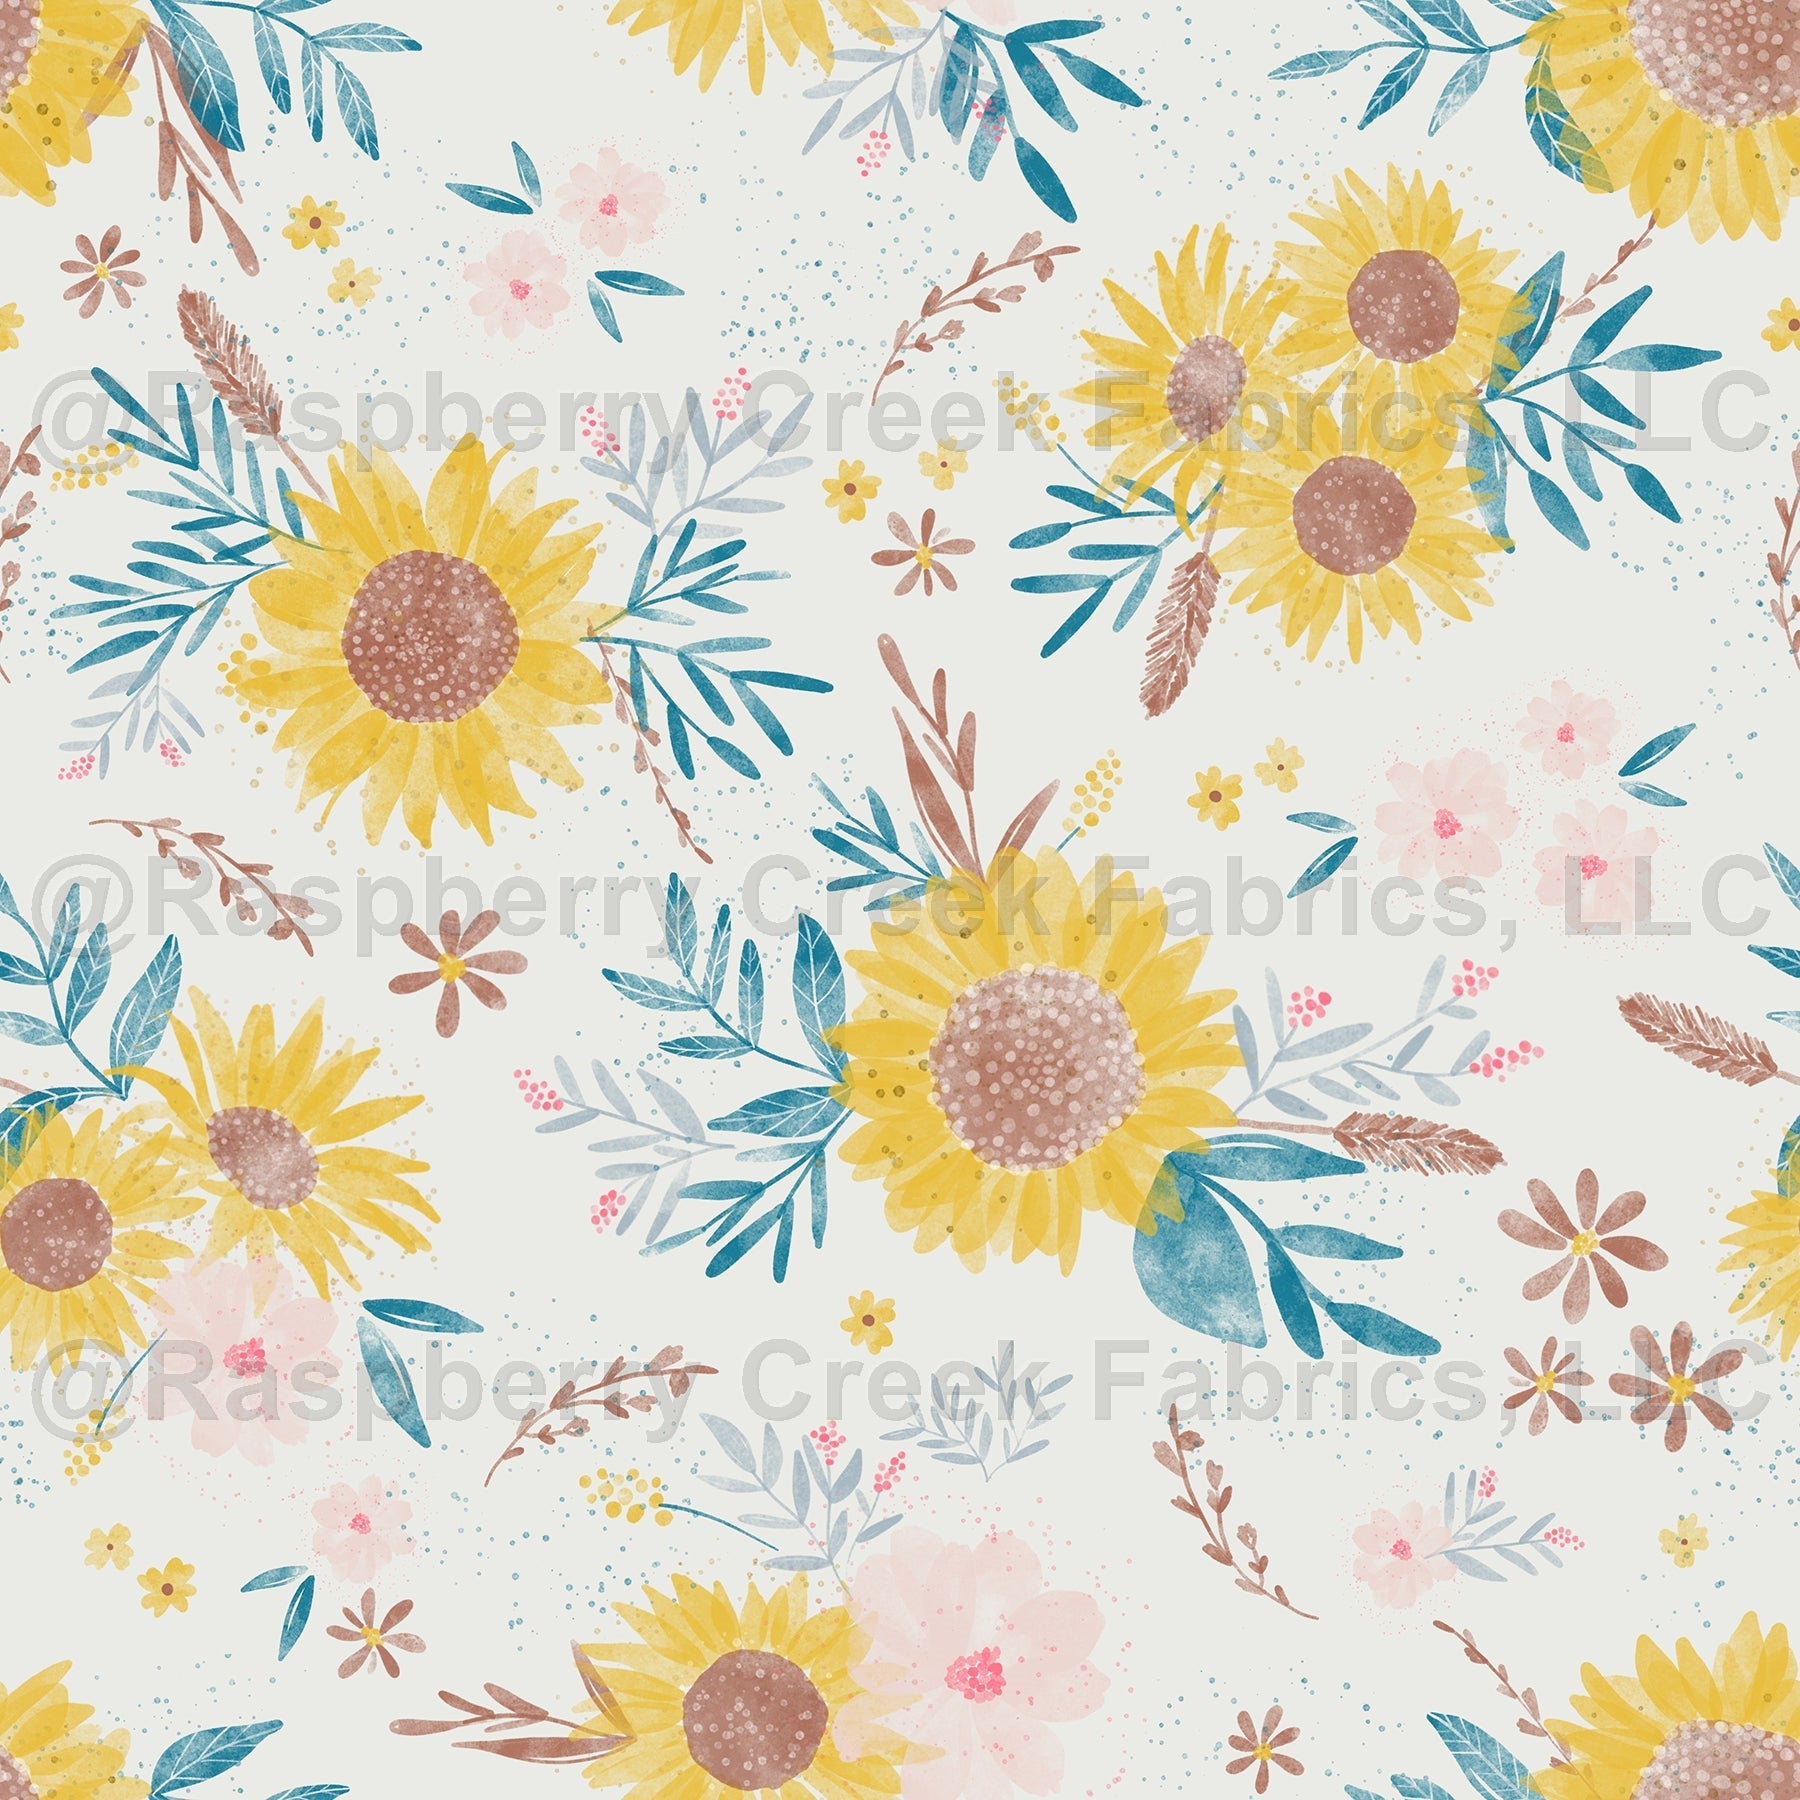 Watercolor Sunflowers on Beige | Sunflower Fields Forever by Kim Henrie Fabric, Raspberry Creek Fabrics, watermarked